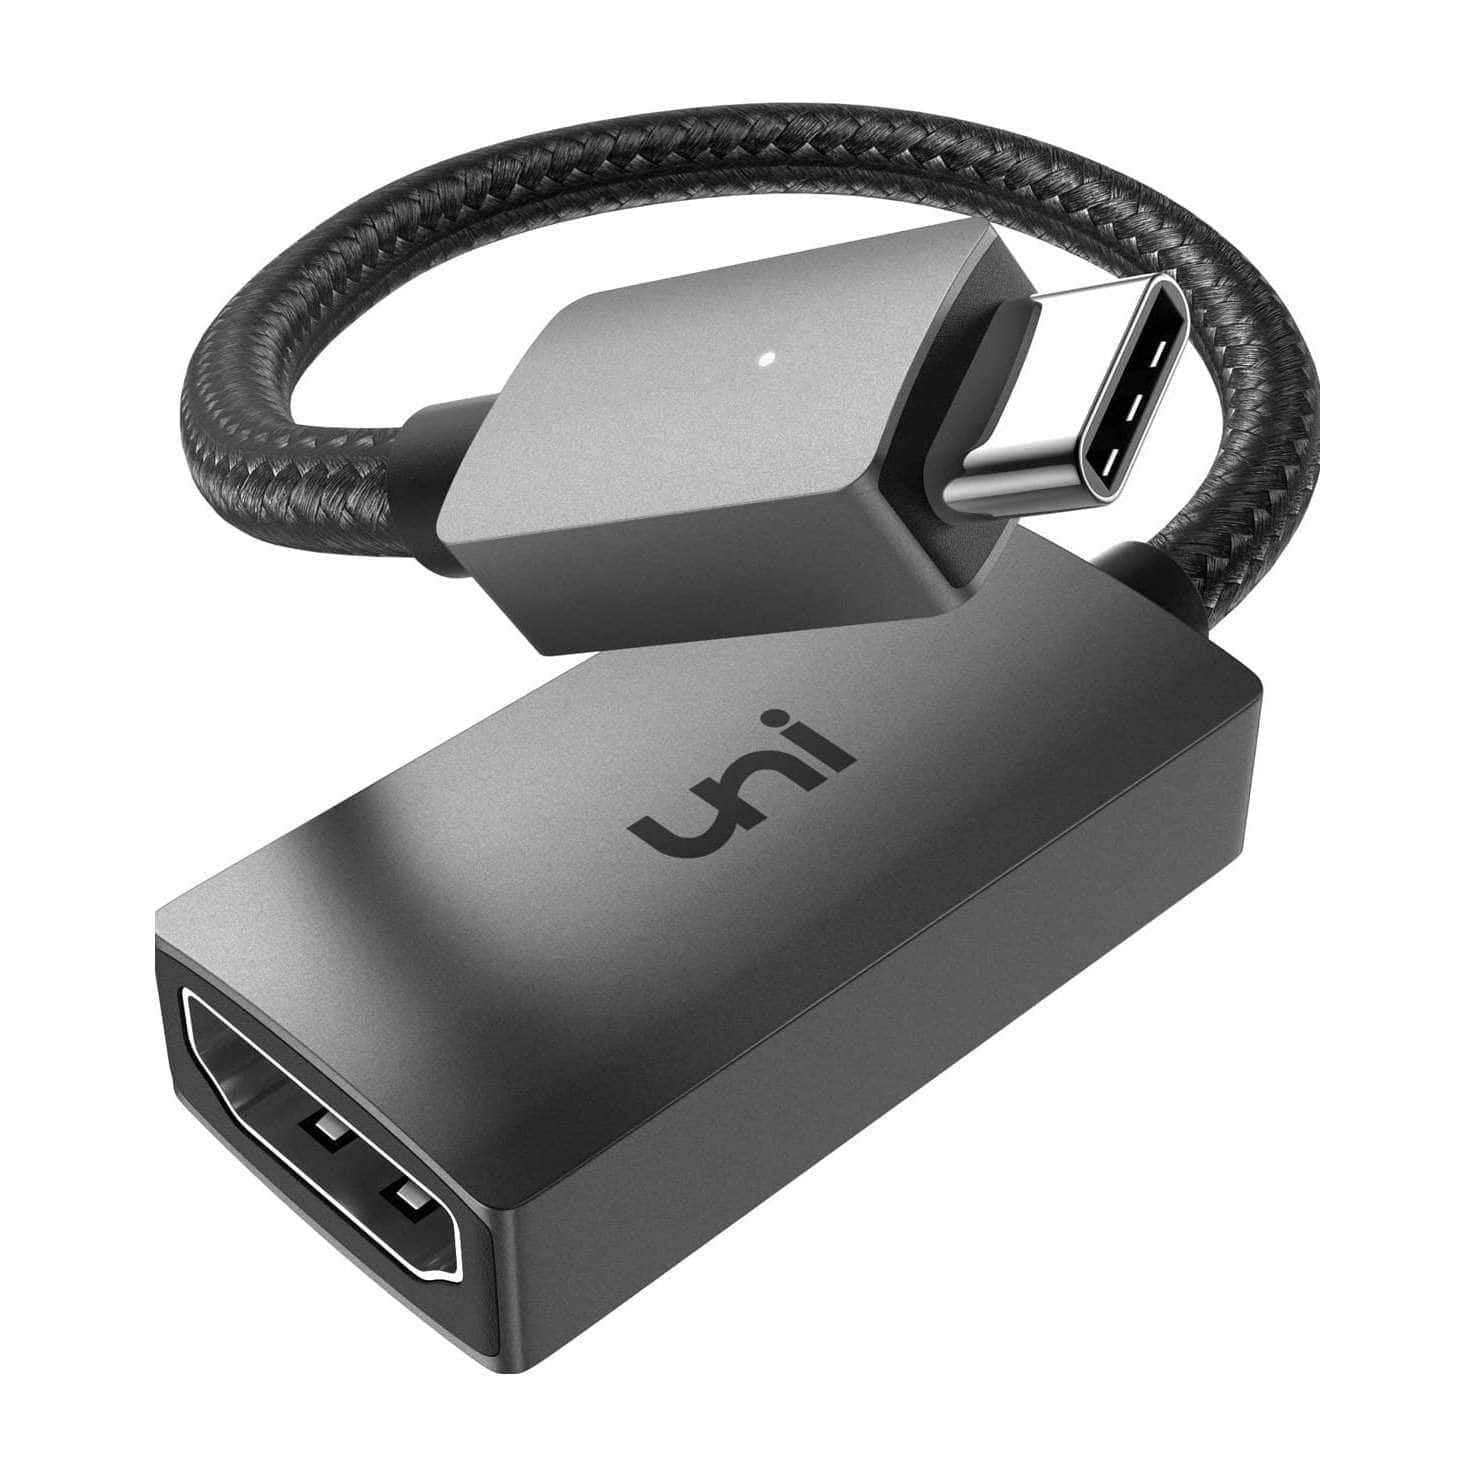 tackle Permanent Kurve USB C to HDMI Adapter 4K, Dual Monitor Setup for MacBook Pro | uni®